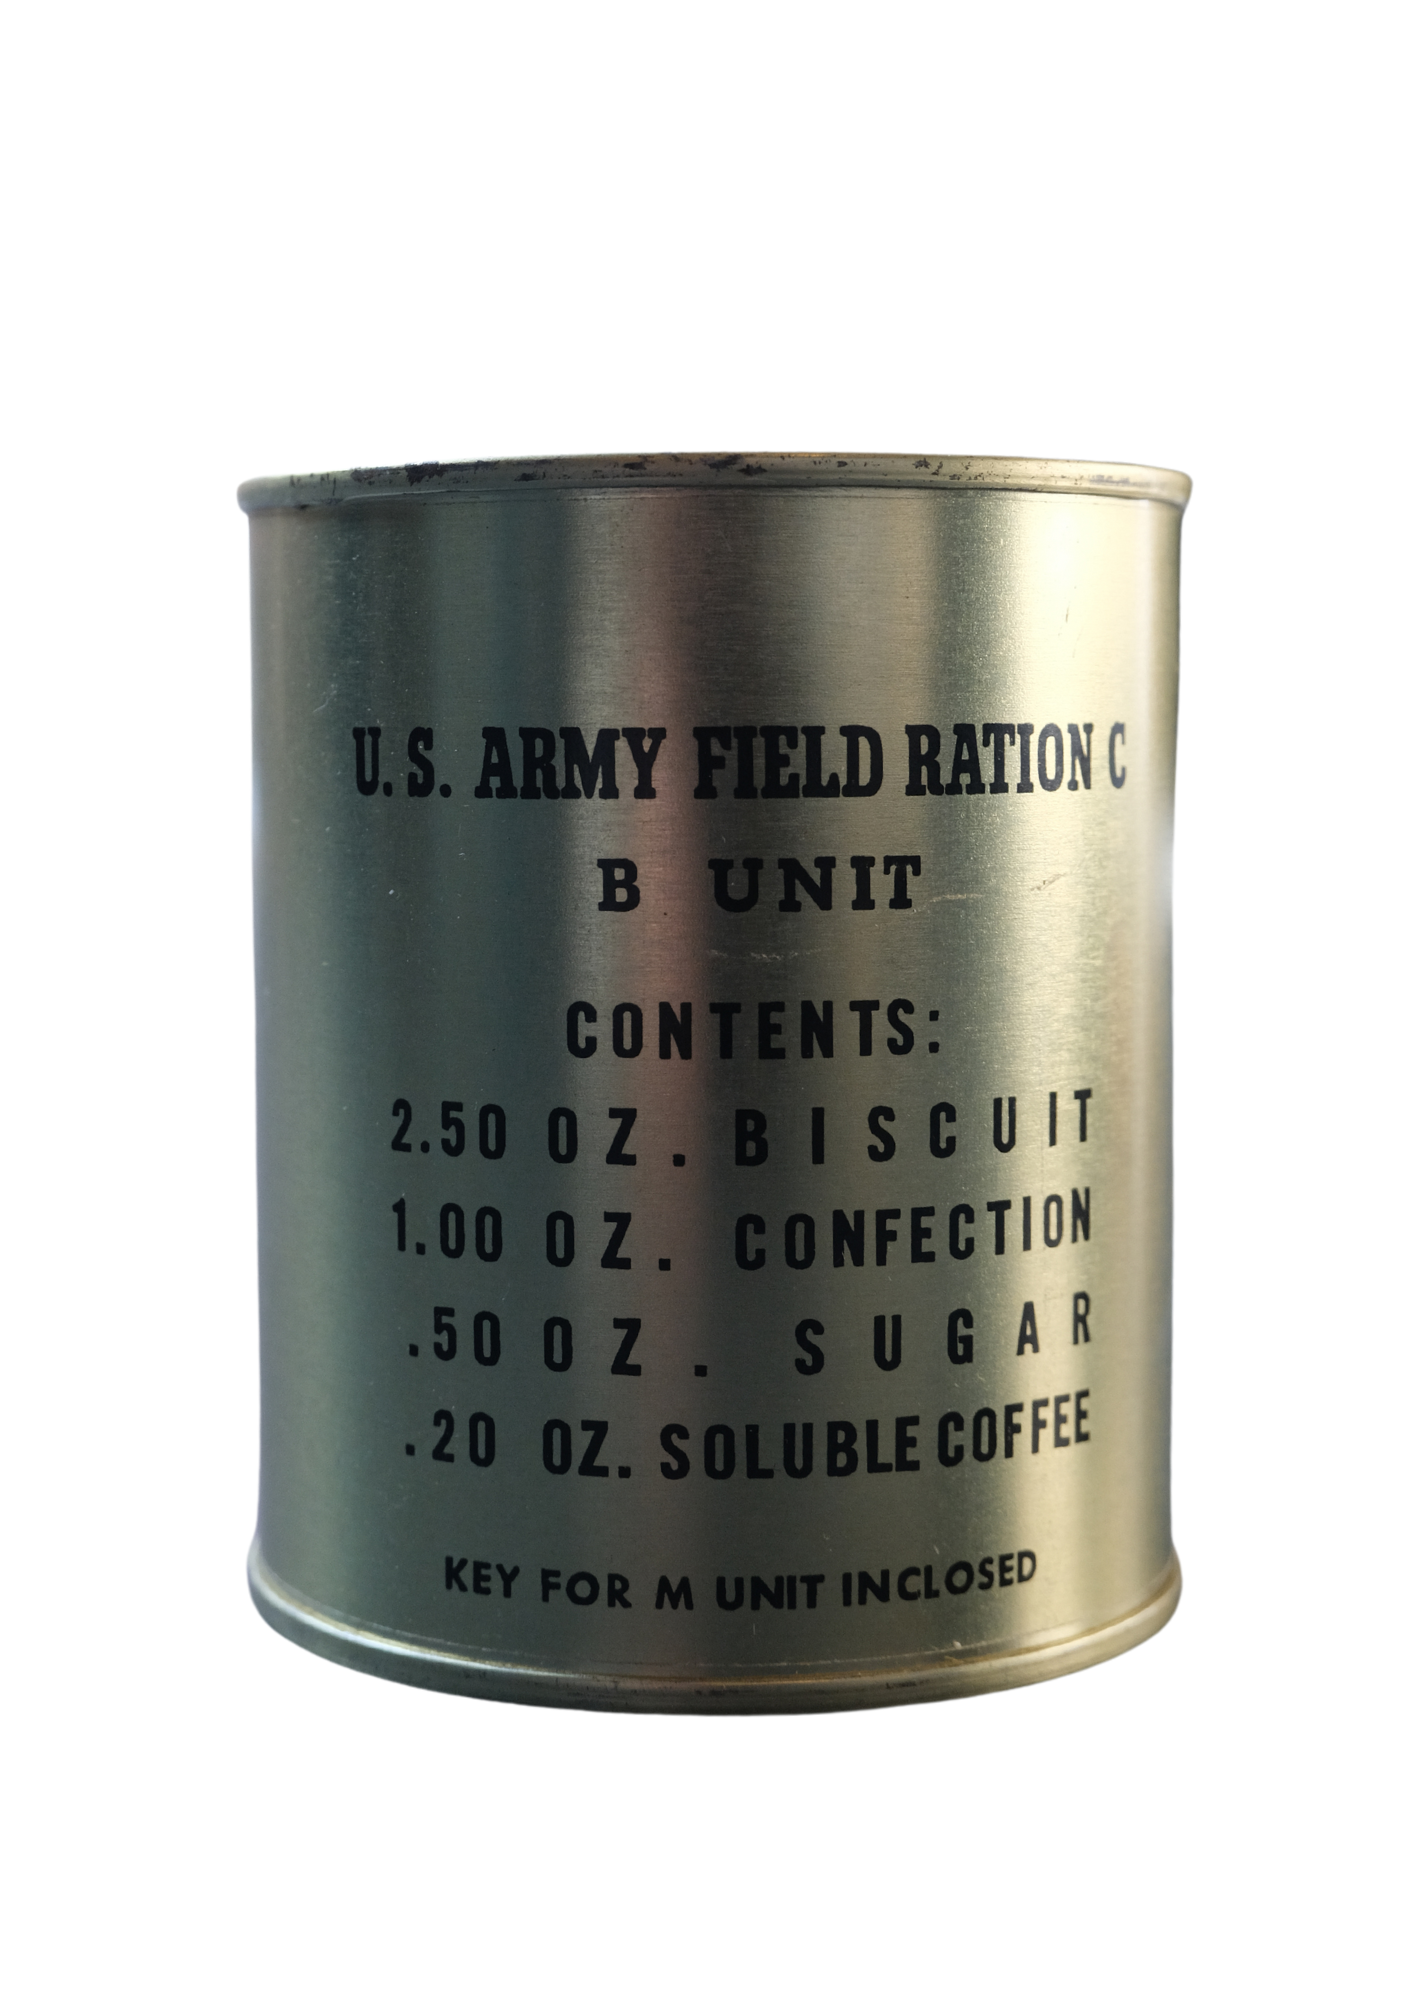 US ARMY Field Ration C :  B Unit Biscuit confection, beverage